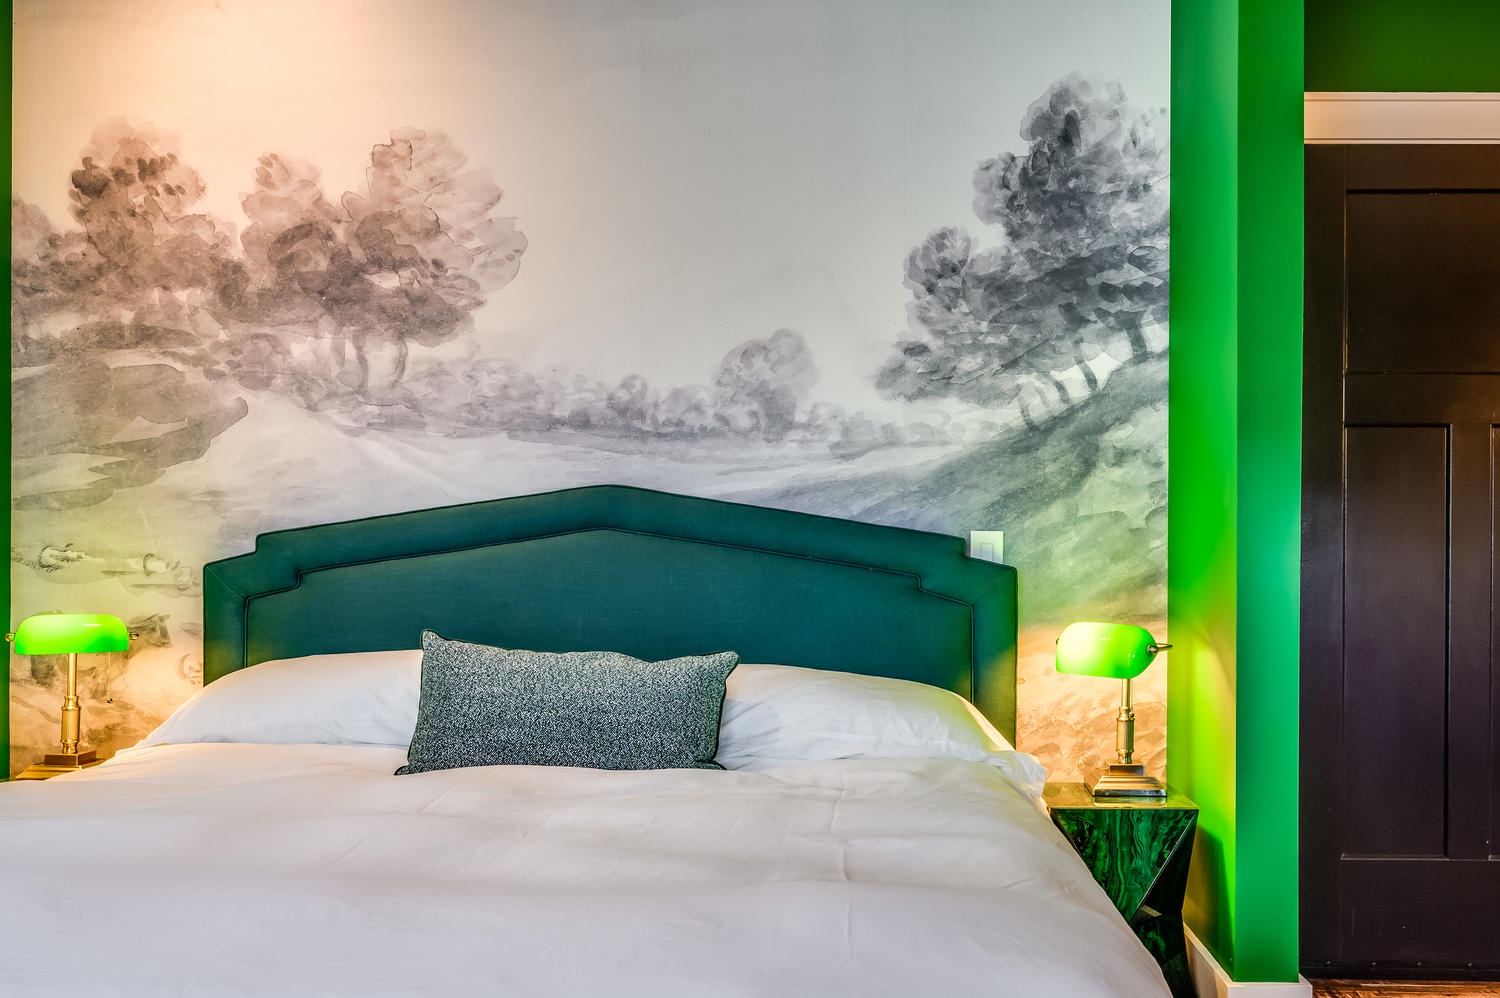 Suite 204 – The 2nd Floor Green Four-Poster Suite offers two Casper King Beds, 2 Smart TVs, and En Suite Bathroom